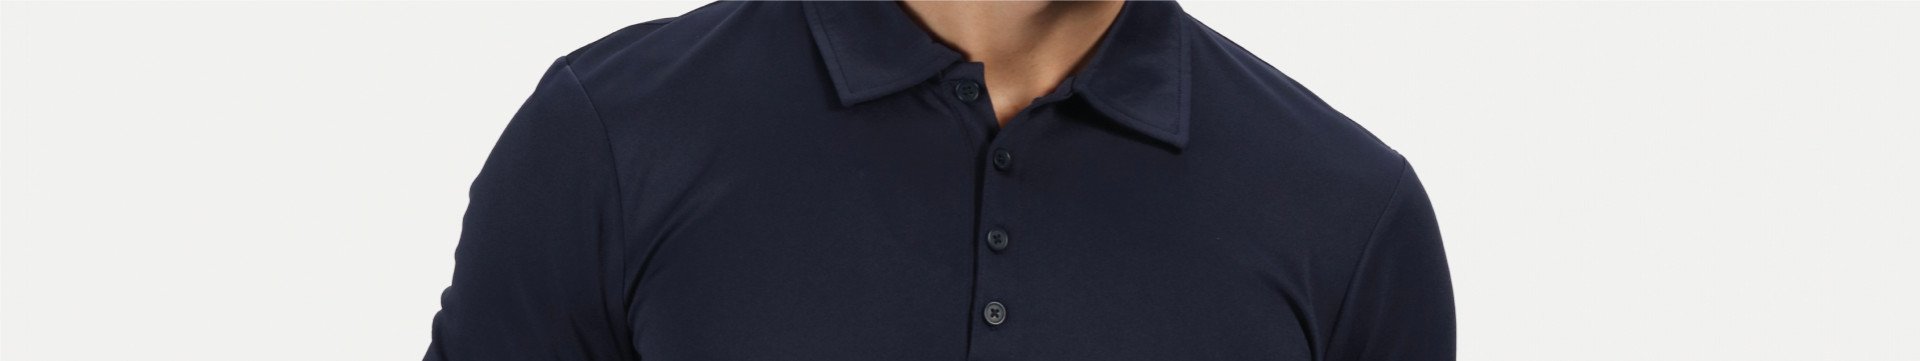 Close up image of a man wearing a black polo shirt